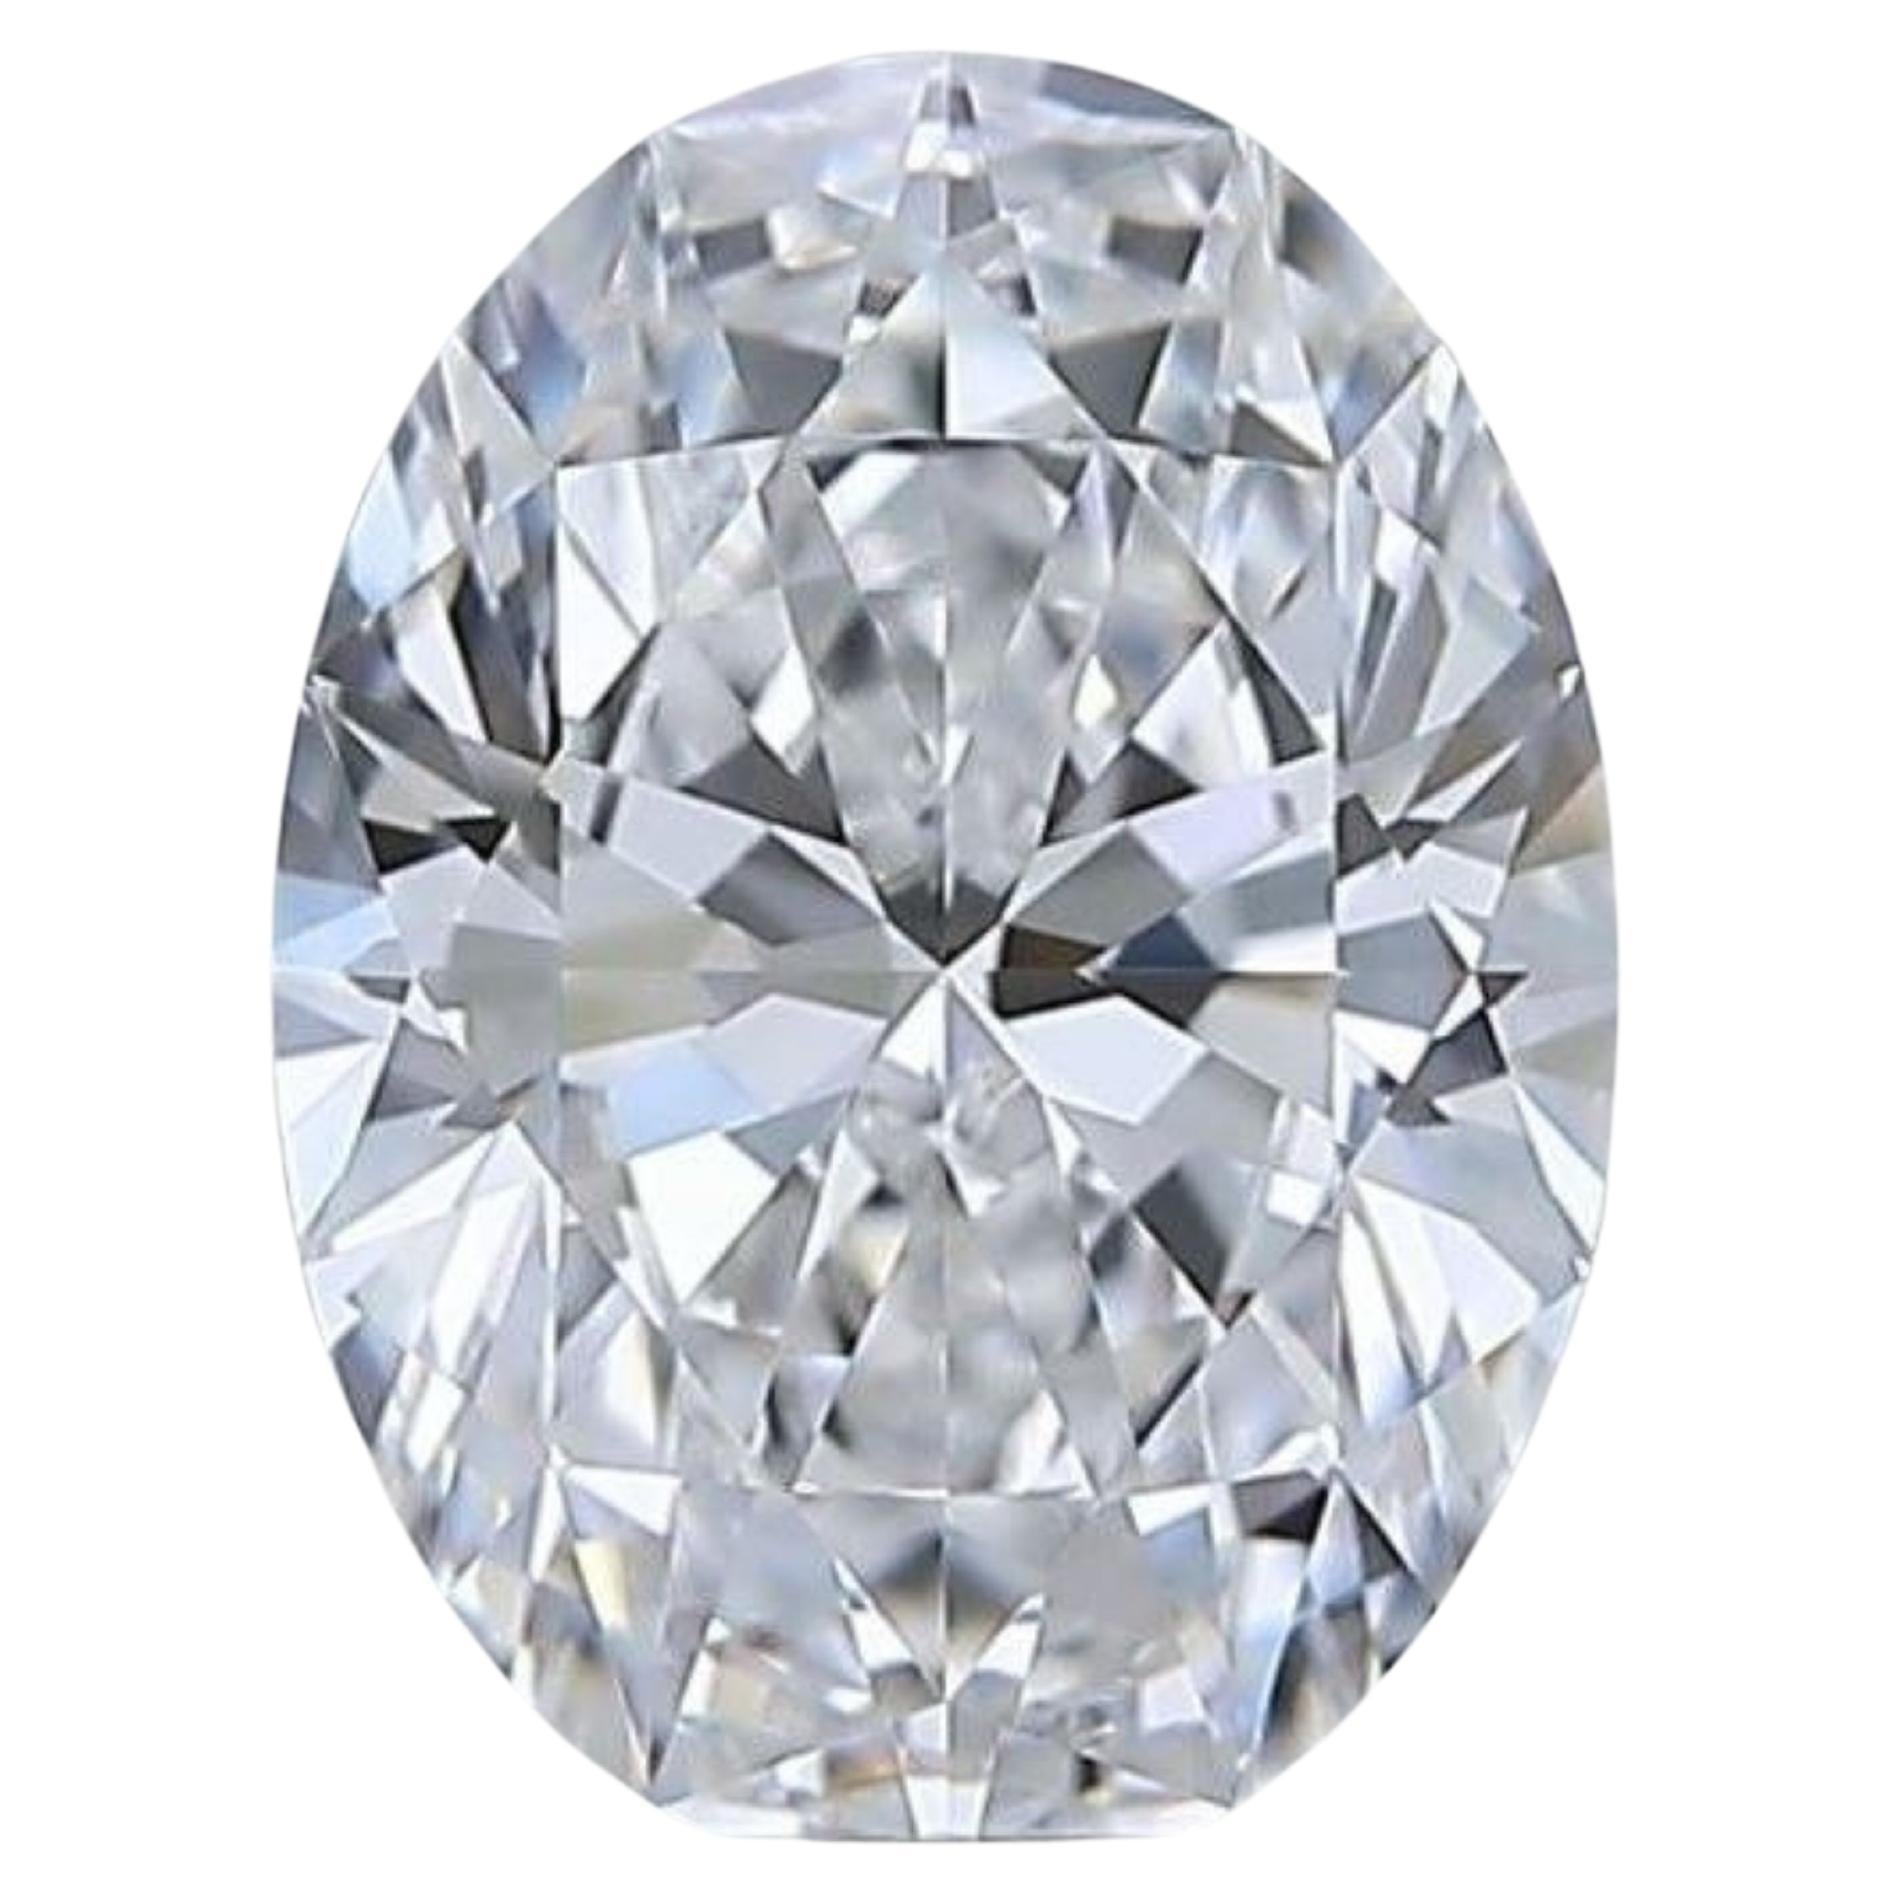 1 pc. Glittering 0.80 Oval Cut Natural Diamond For Sale